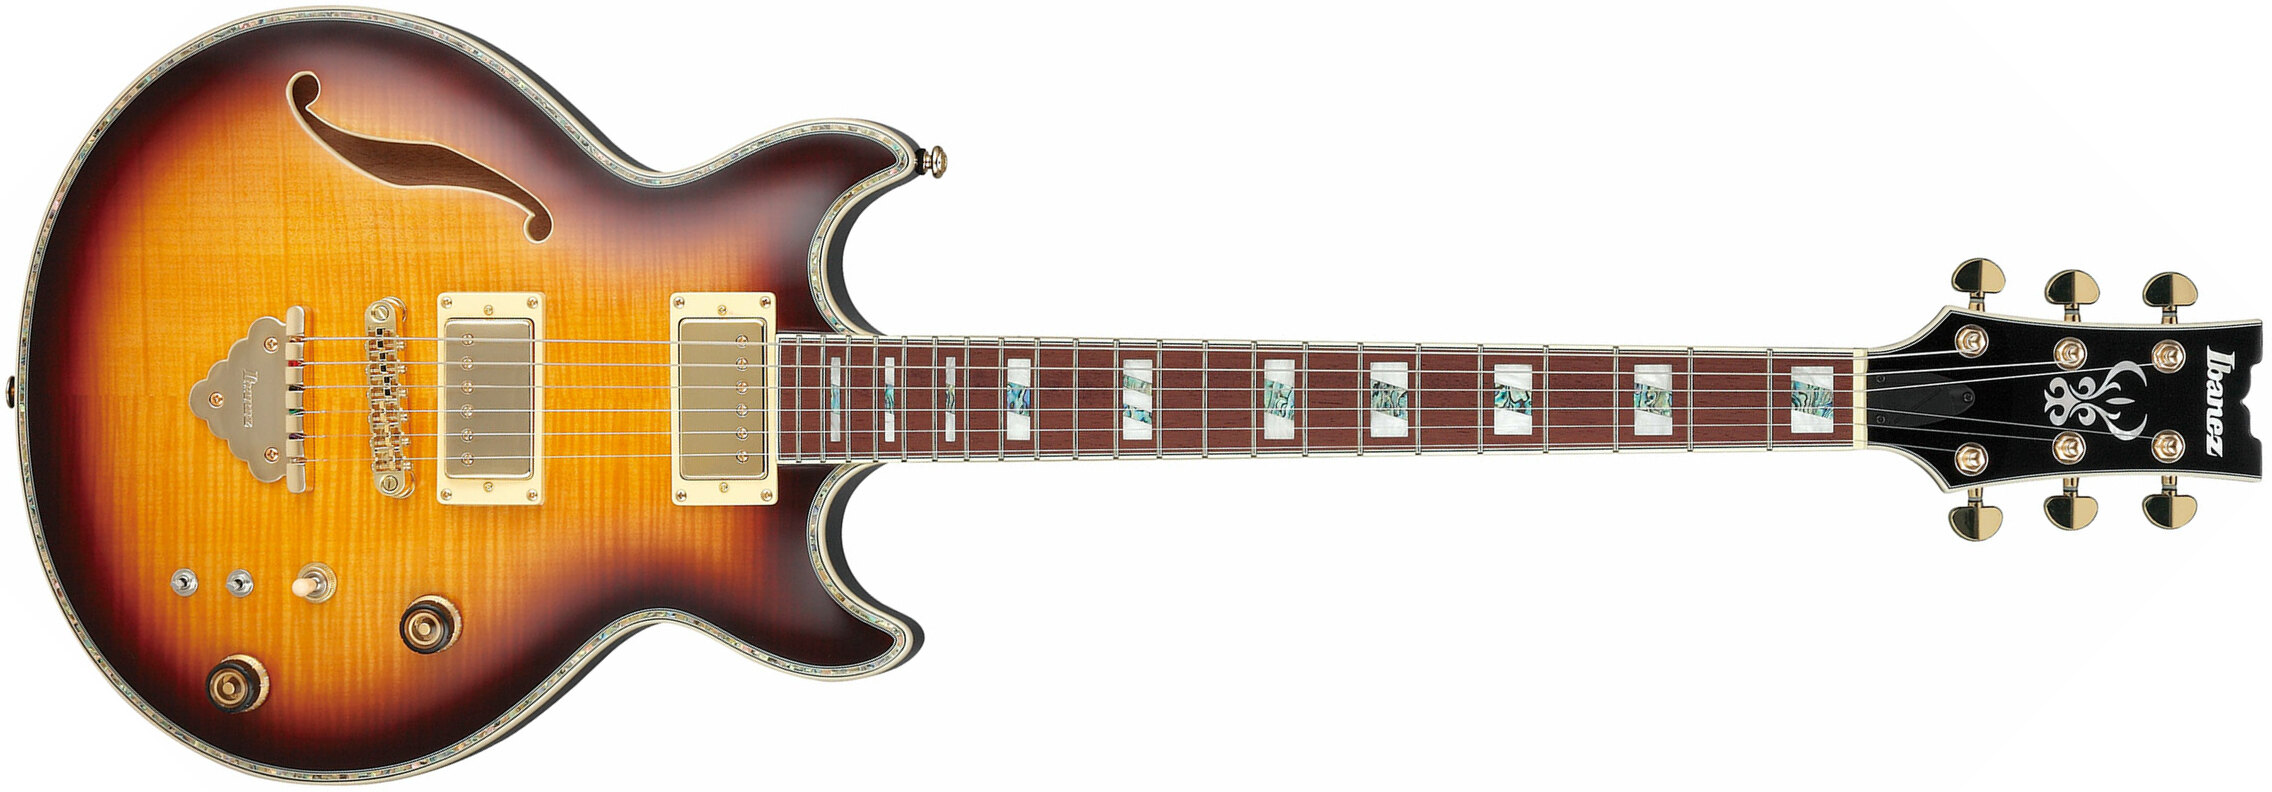 Ibanez Ar520hfm Vls Standard Hh Ht Jat - Violin Sunburst - Hollow-body electric guitar - Main picture